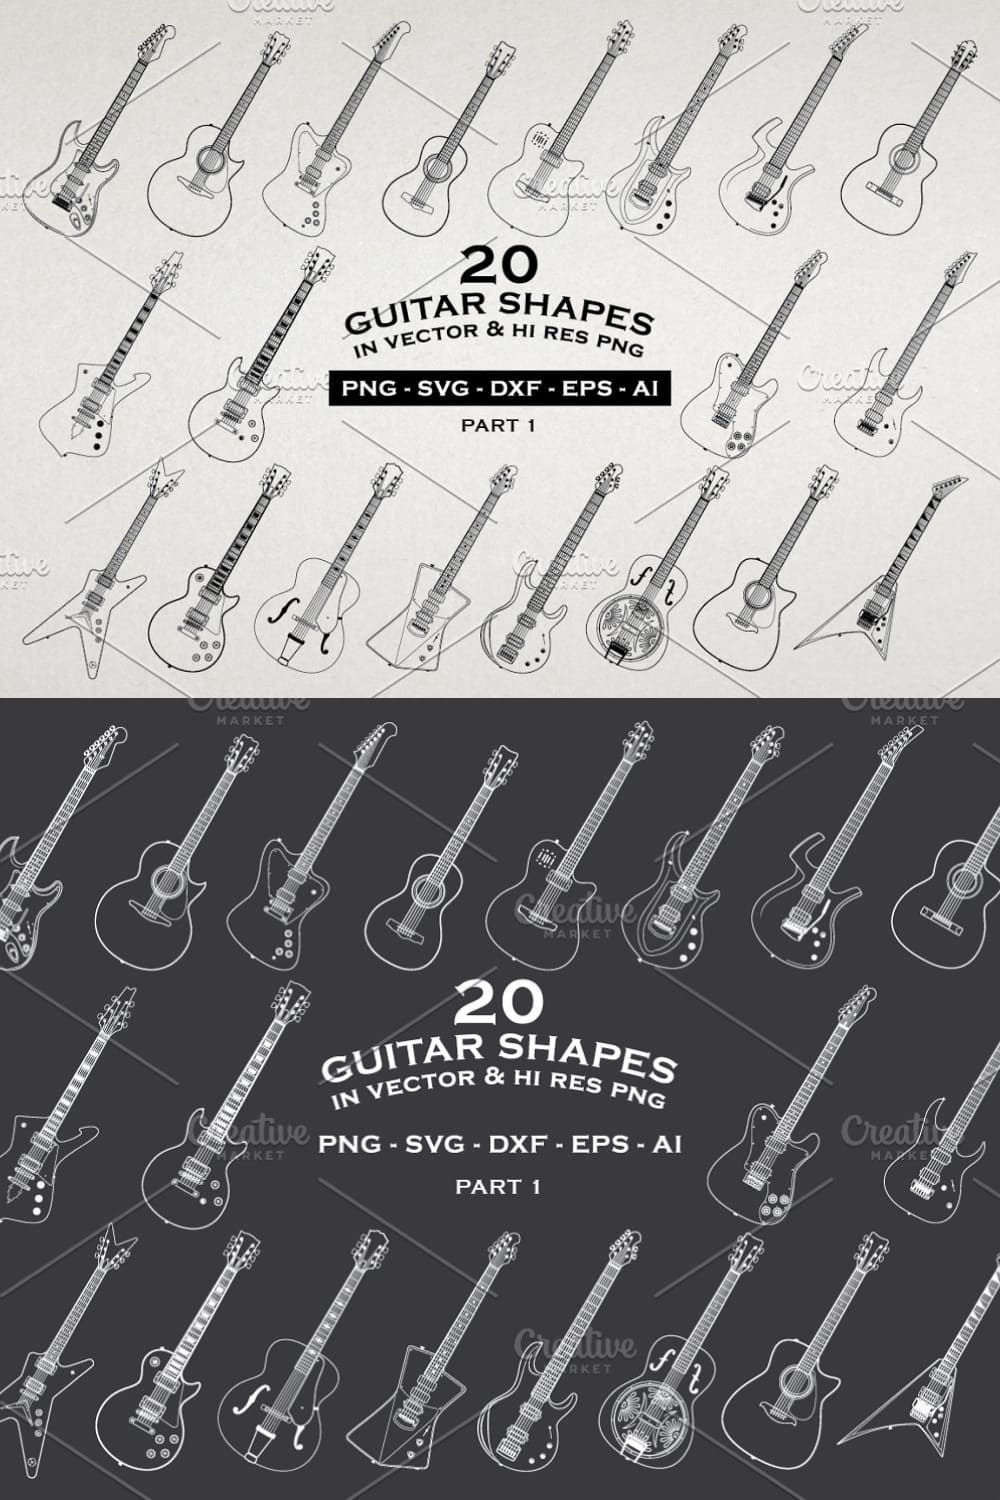 Pack of wonderful images of various guitars.